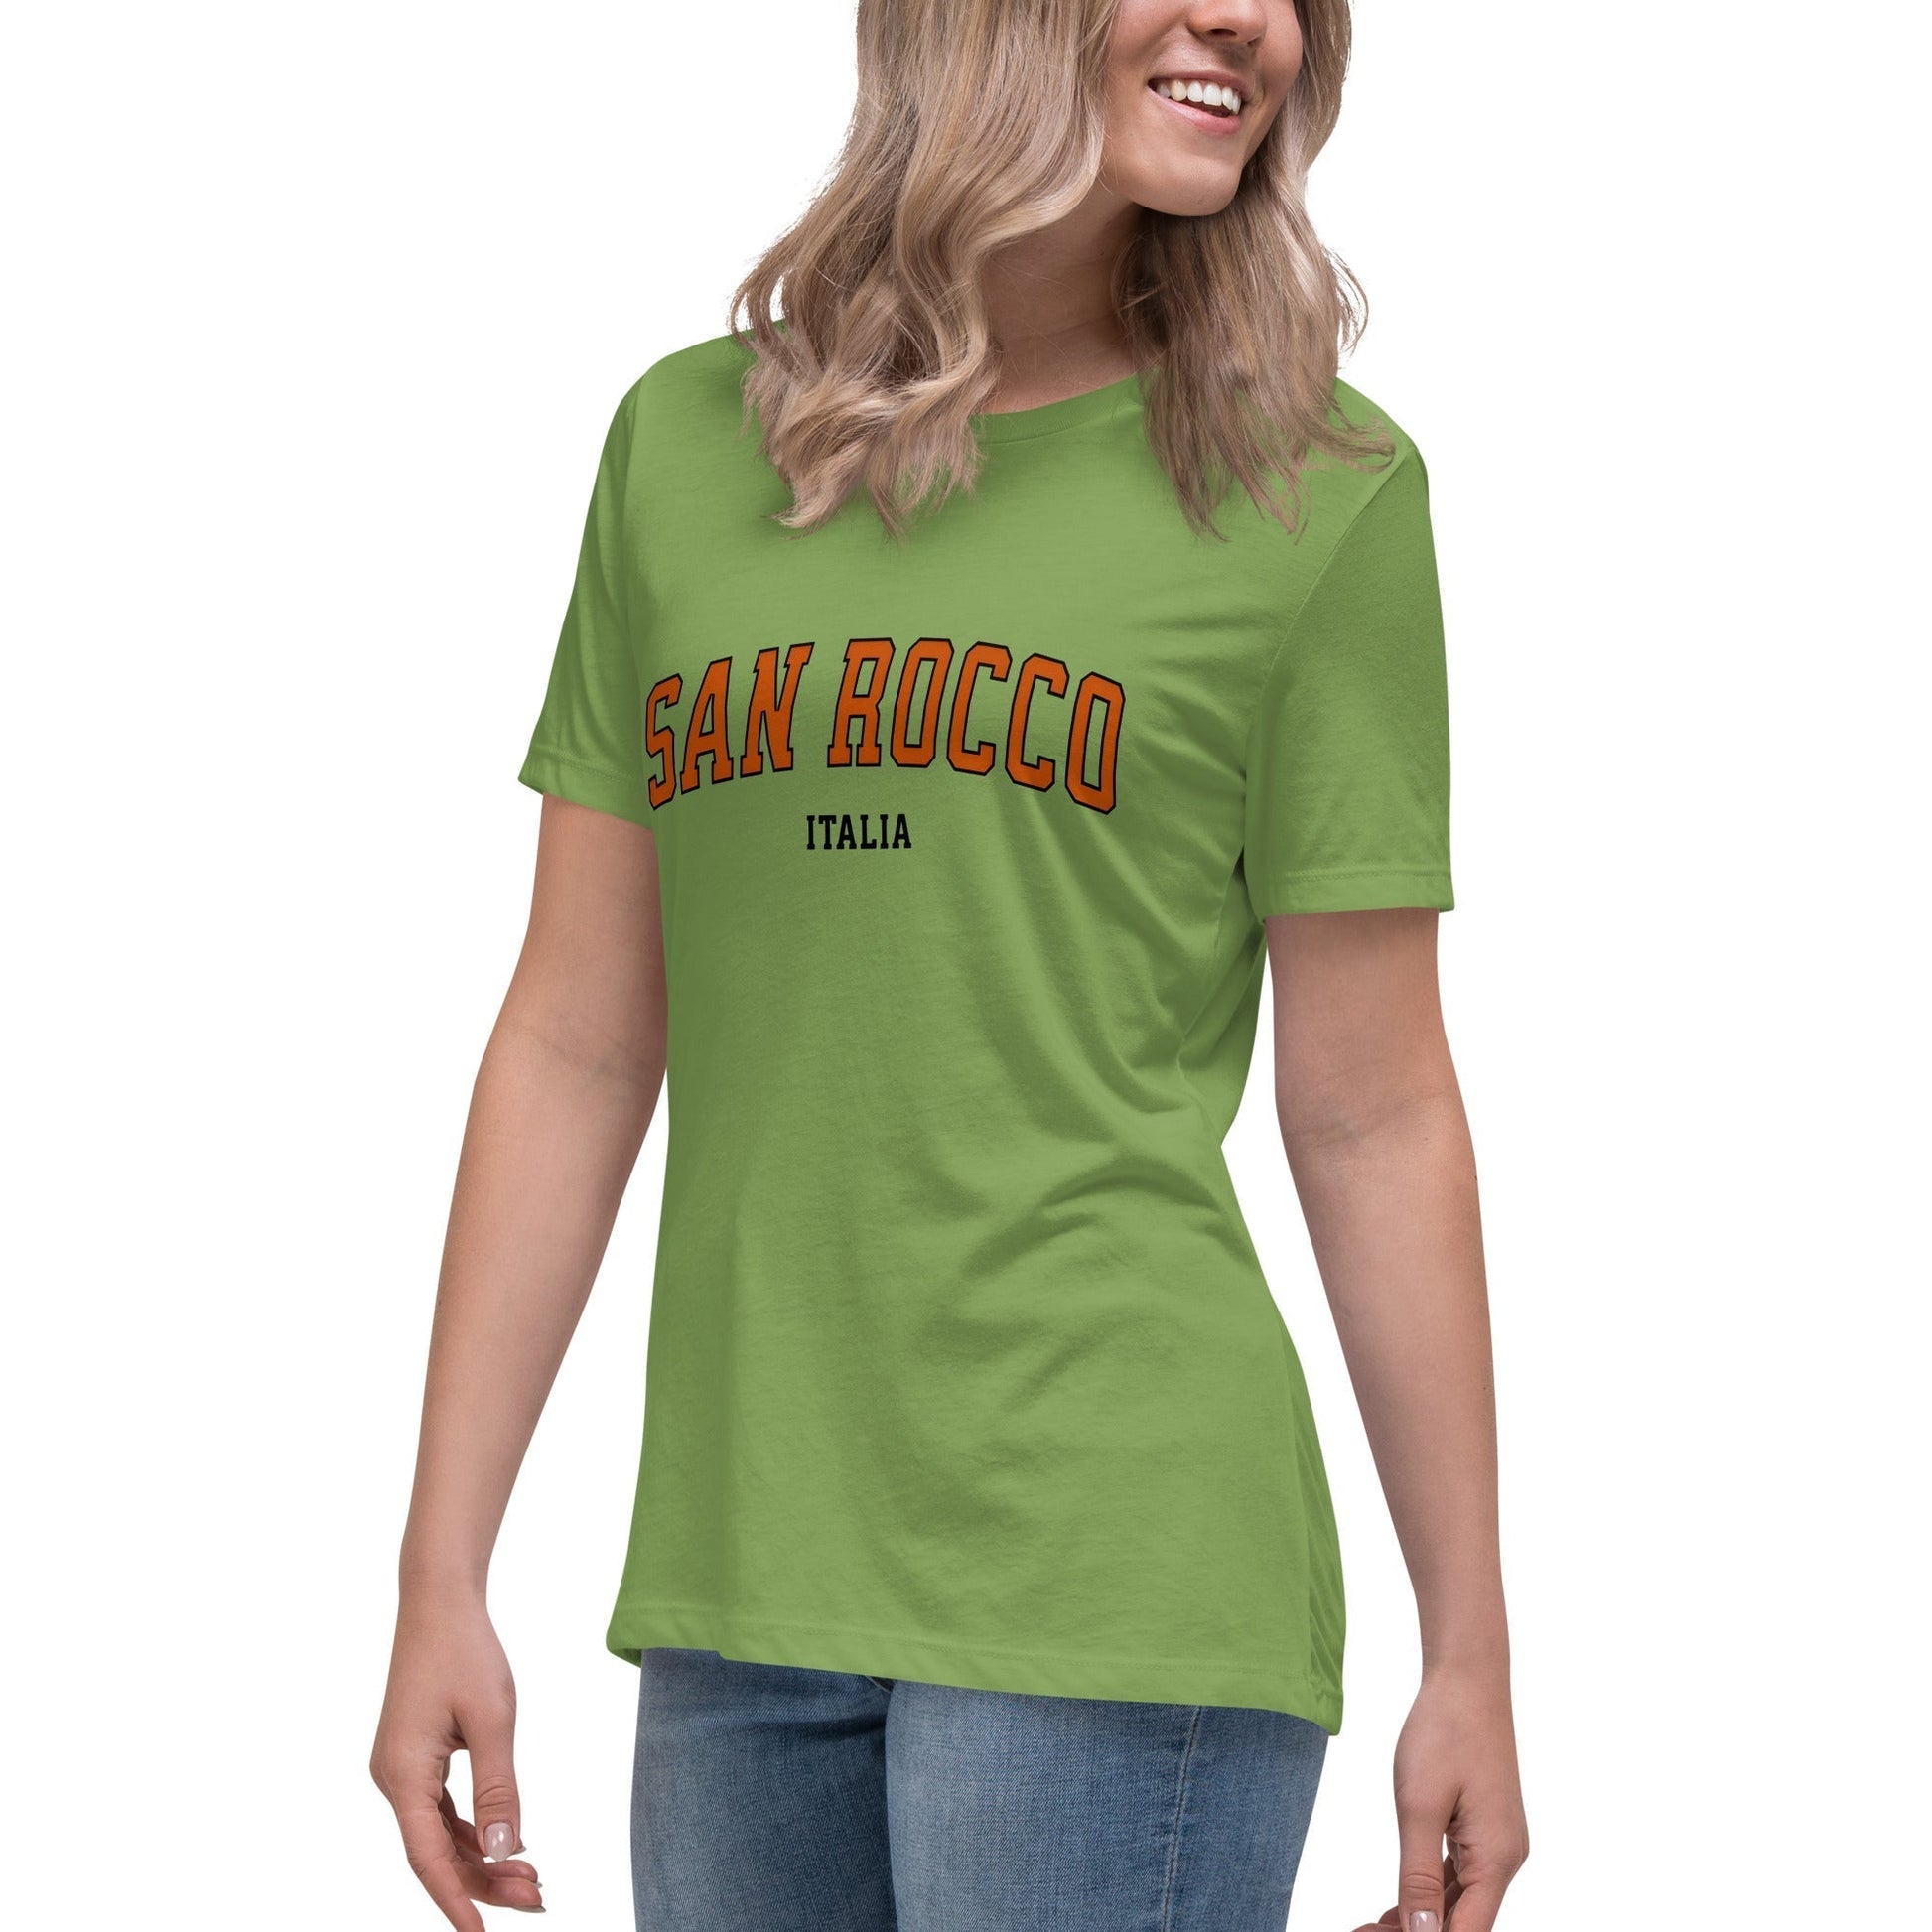 San Rocco Italia University Women's Relaxed T-Shirt - Premium  - Shop now at San Rocco Italia